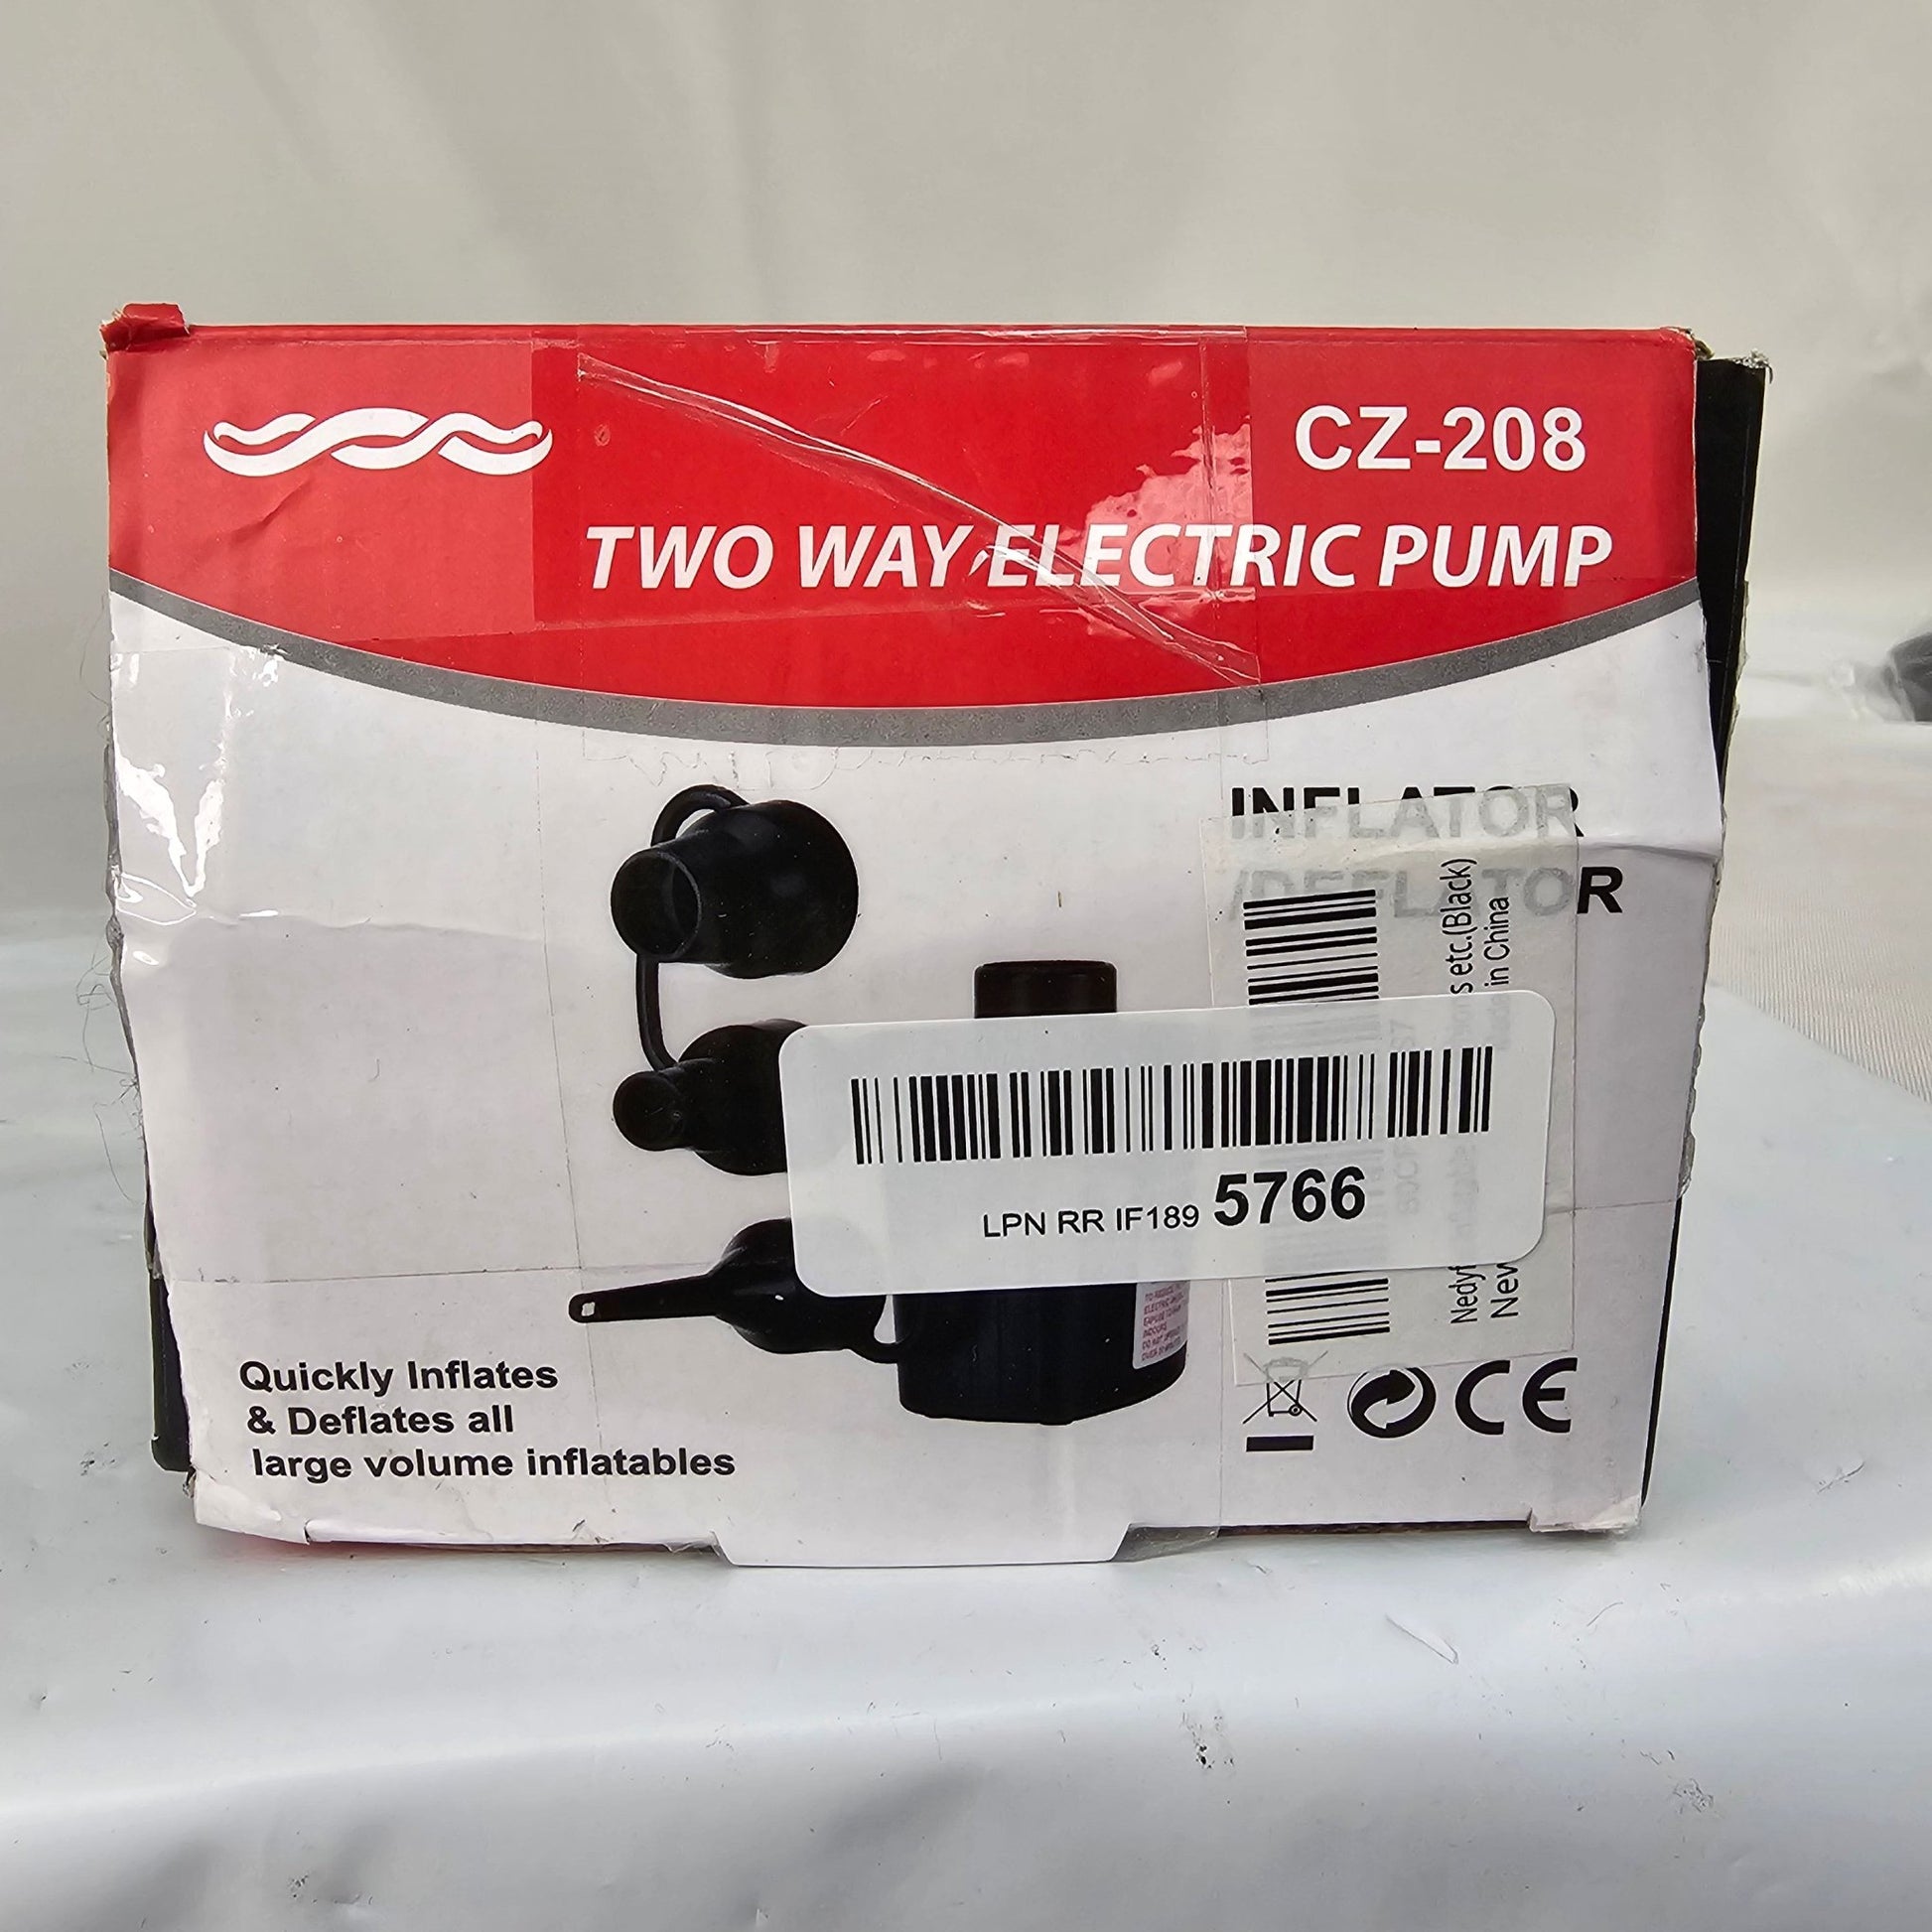 Two Way Electric Pump CZ-208 - DQ Distribution